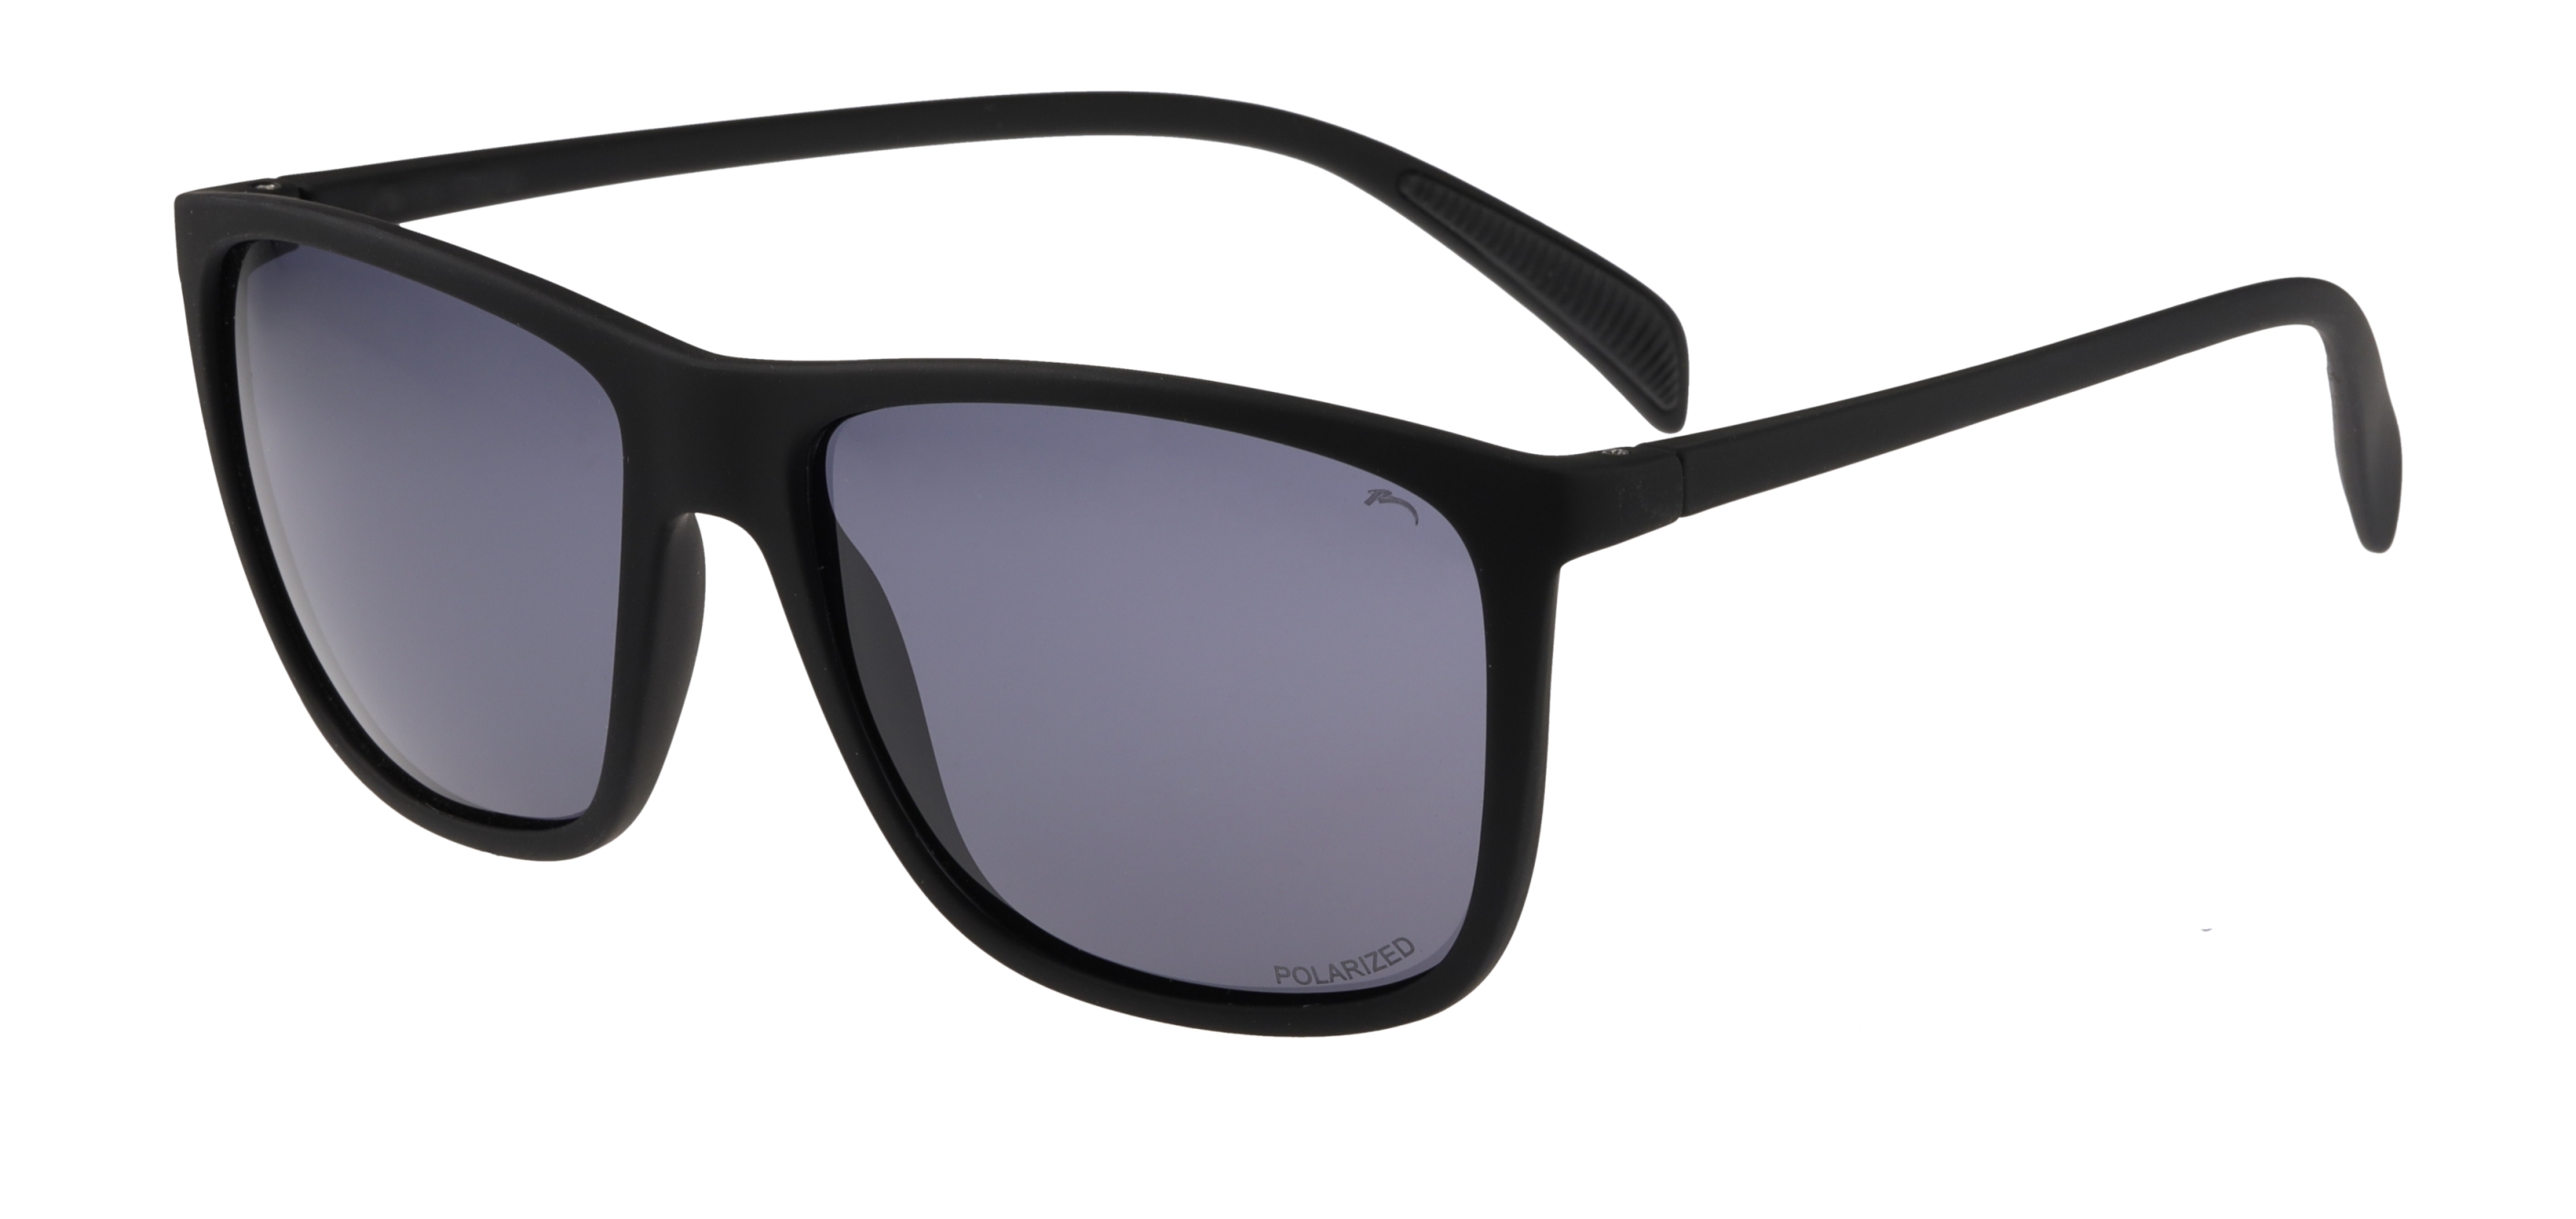 Polarized sunglasses  Relax Dubbo R2357B standard